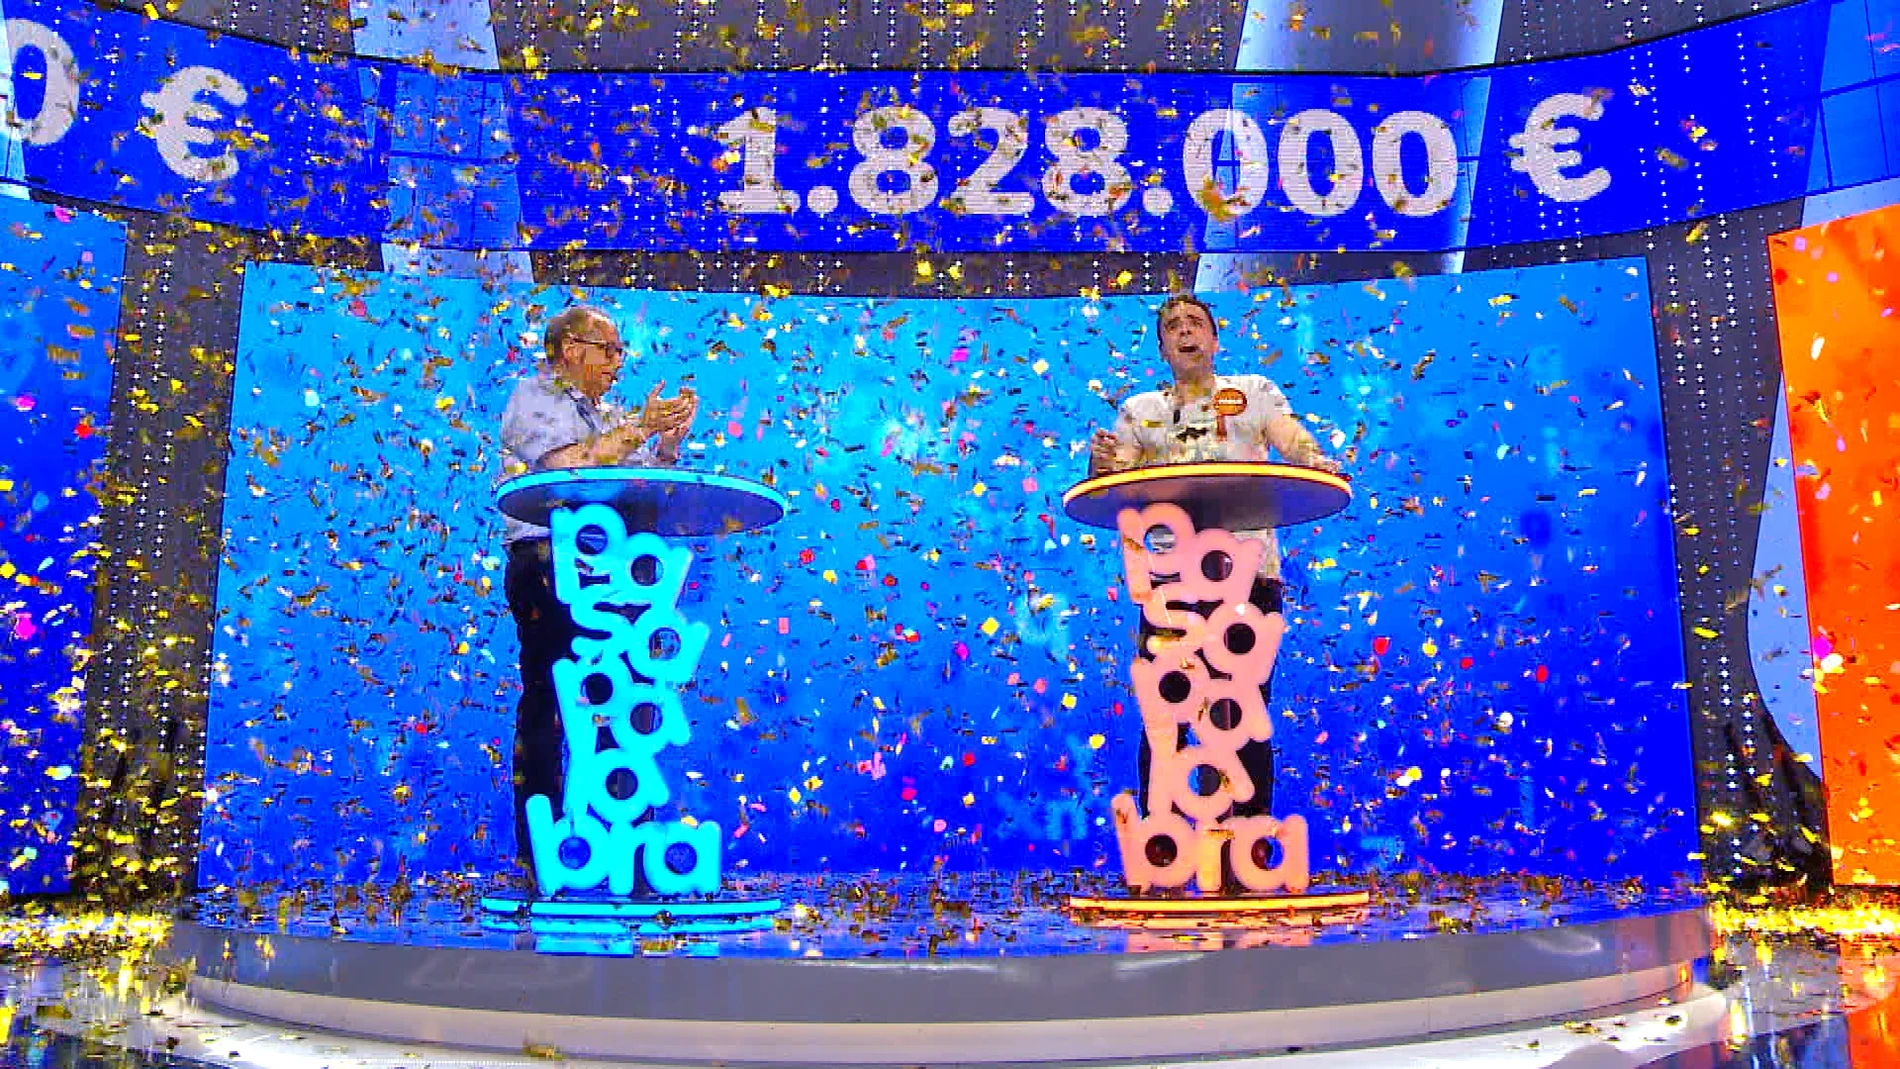 Pablo Díaz gana 1.828.000 euros con el bote de Pasapalabra